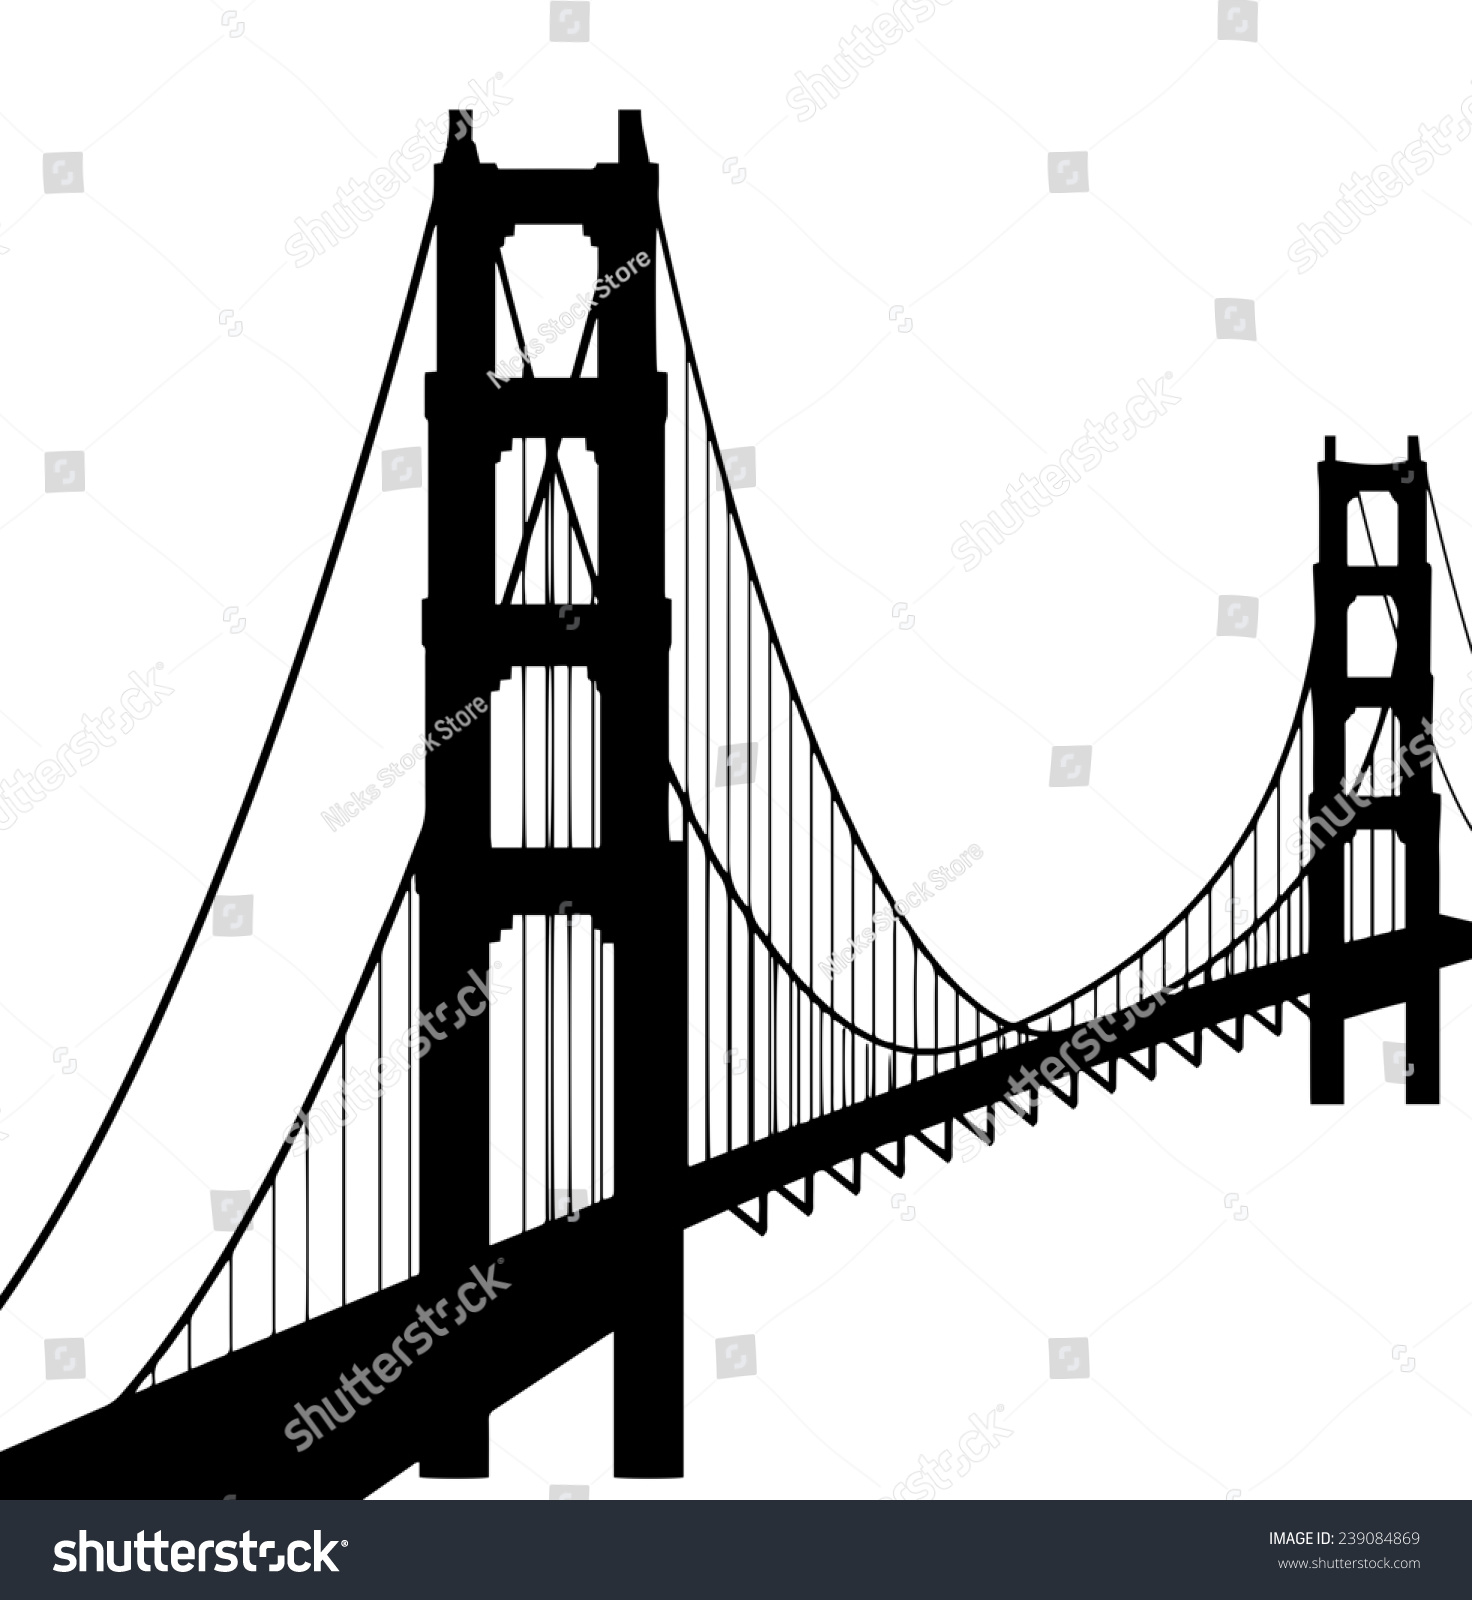 Golden Gate Bridge Silhouette のイラスト素材